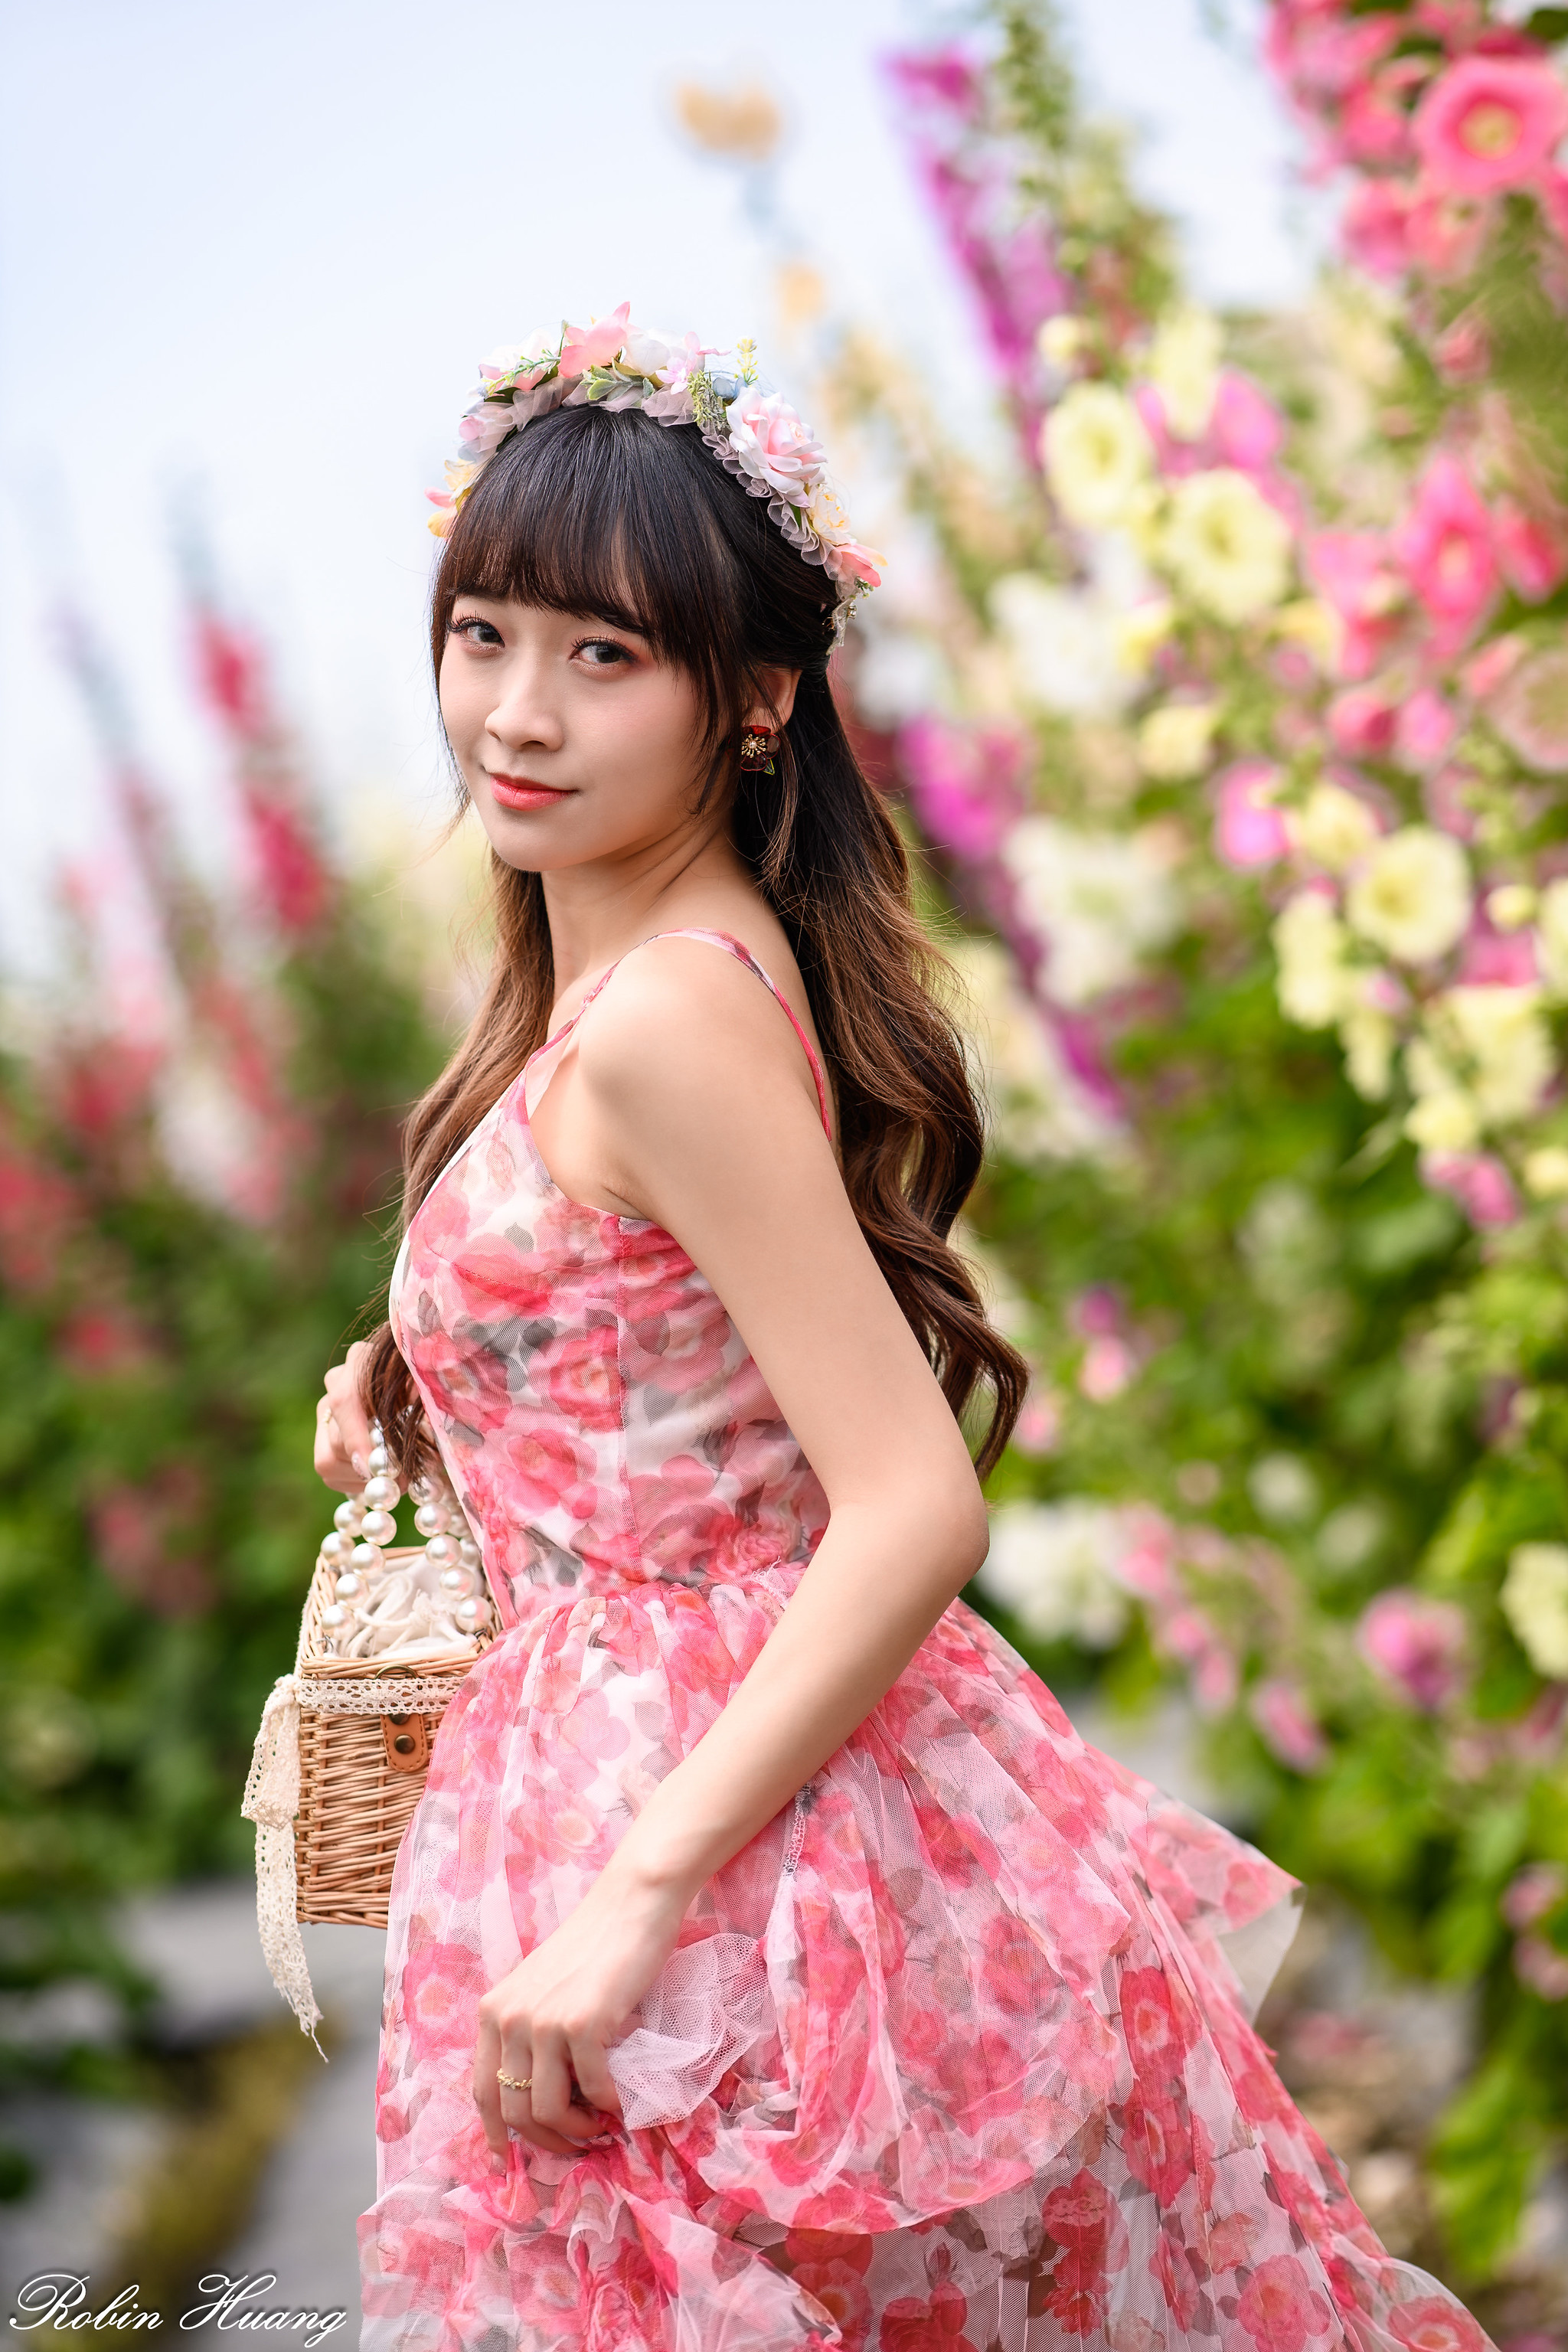 Robin Huang Women Asian Flower In Hair Pink Dress Flowers 2048x3072